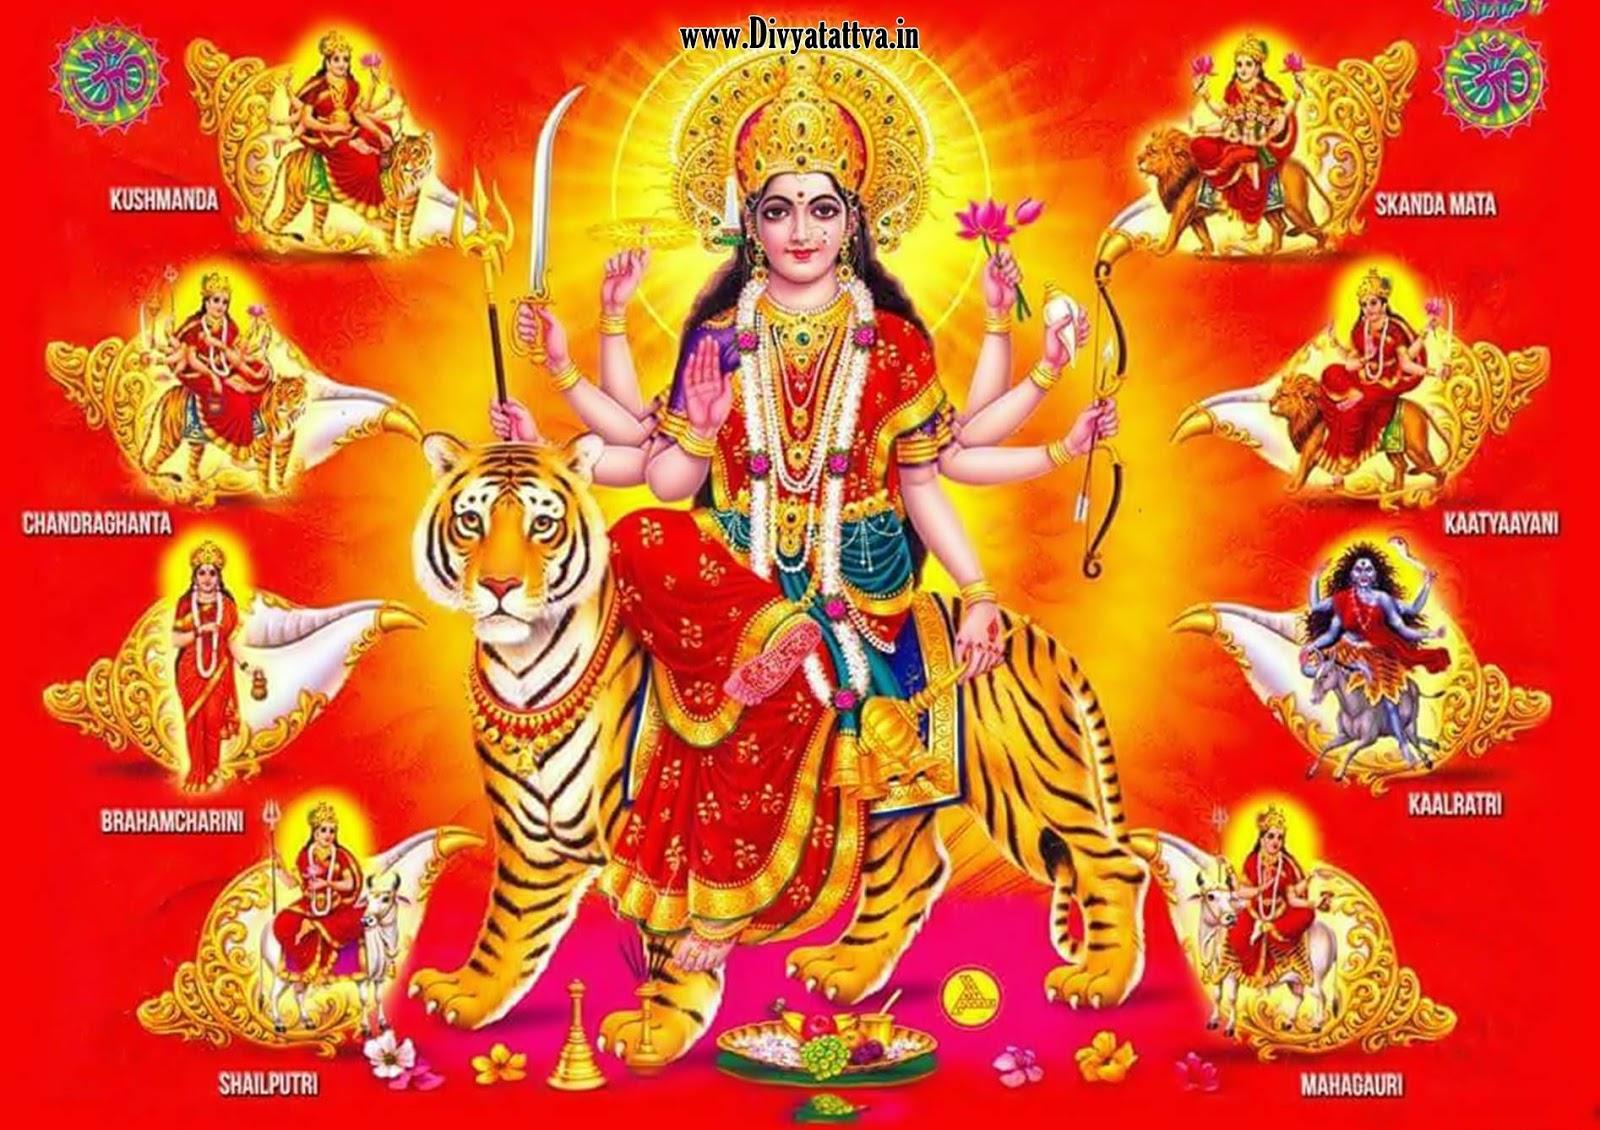 Goddess Durga HD Wallpaper Shakti Full HD Wide Goddess Durga Background Image Devi Maa Photo And Picture Free Download